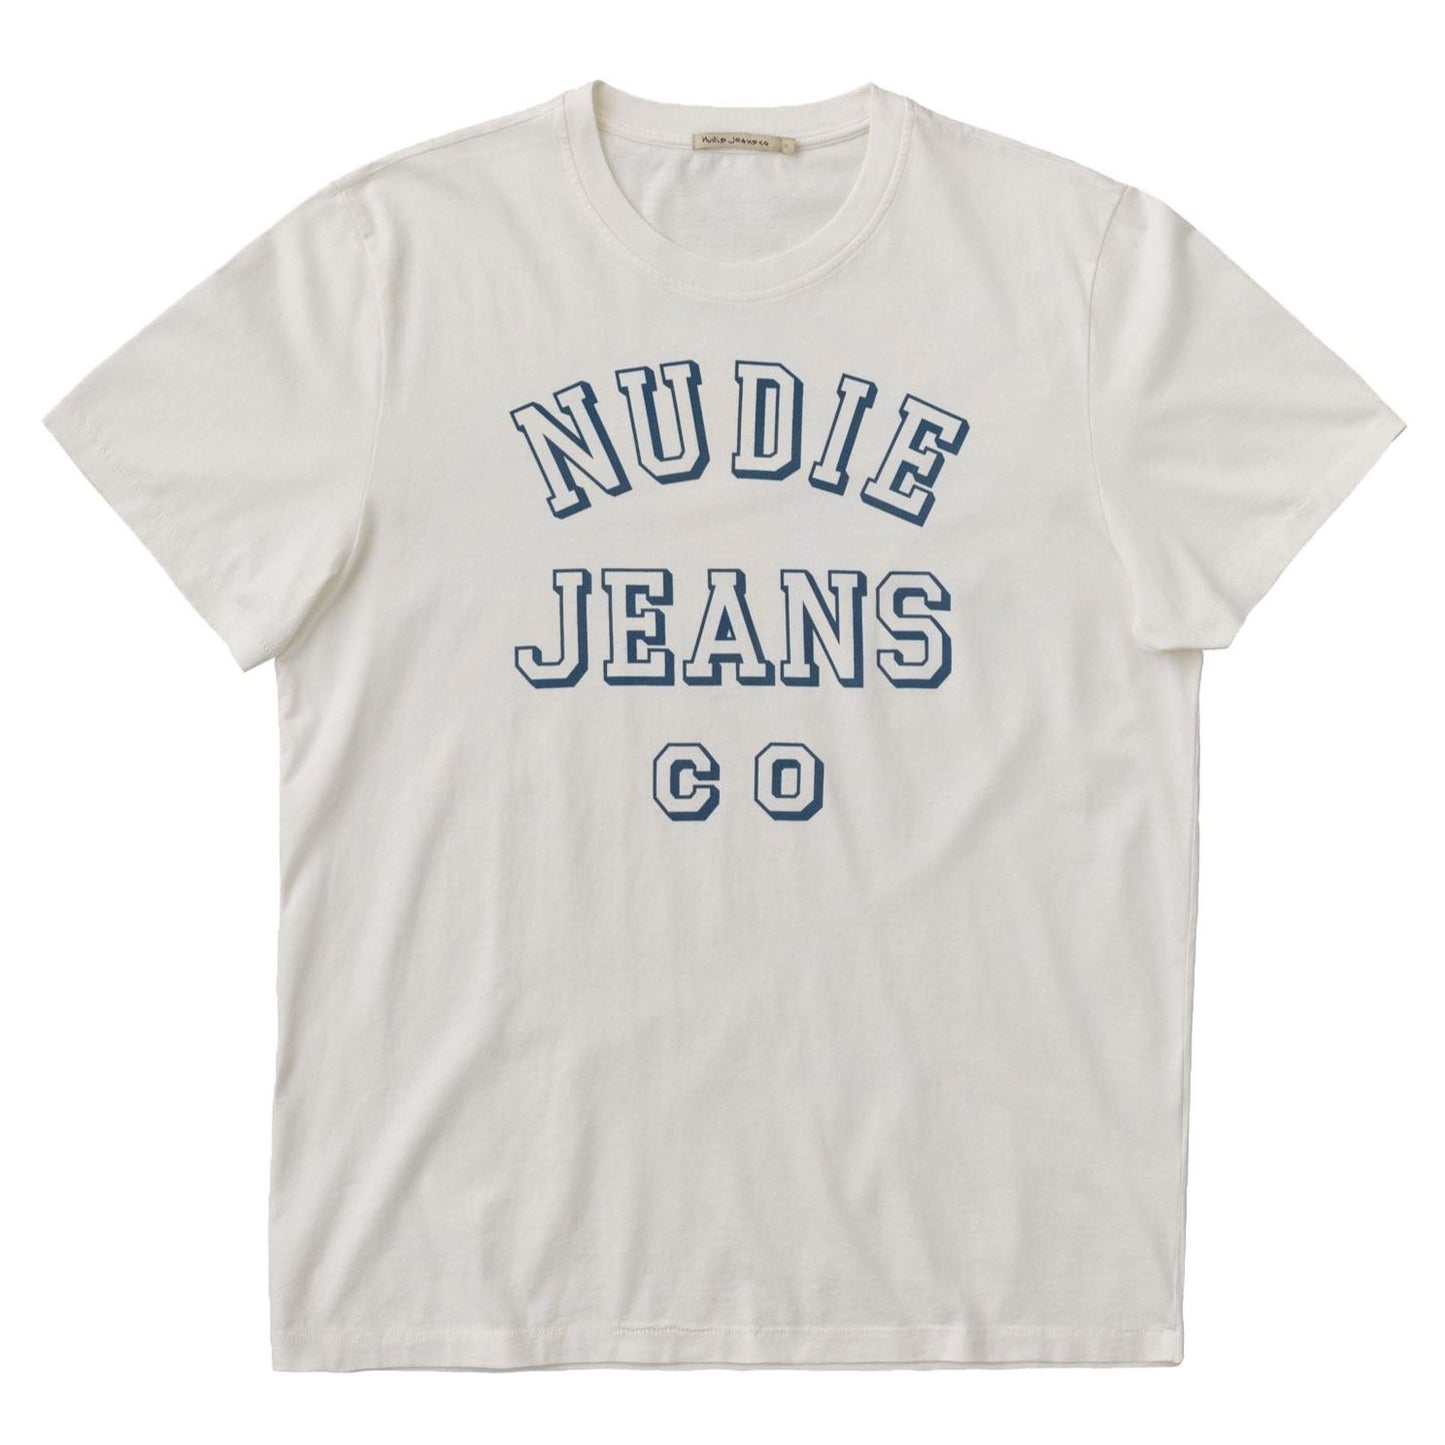 Nudie Jeans Co. Roy Nudie Jeans CO T-Shirt